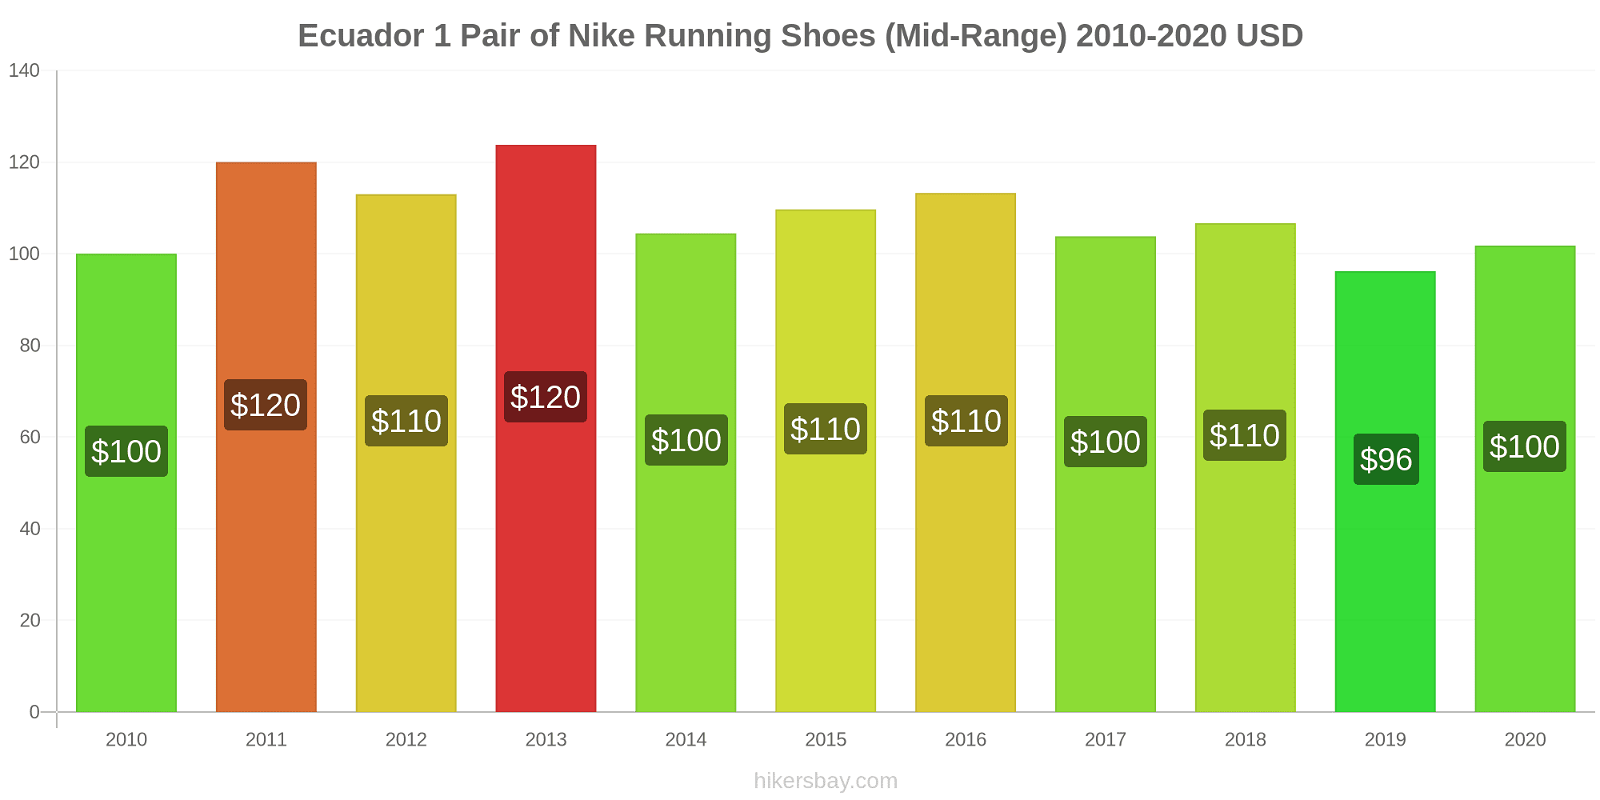 Ecuador price changes 1 Pair of Nike Running Shoes (Mid-Range) hikersbay.com